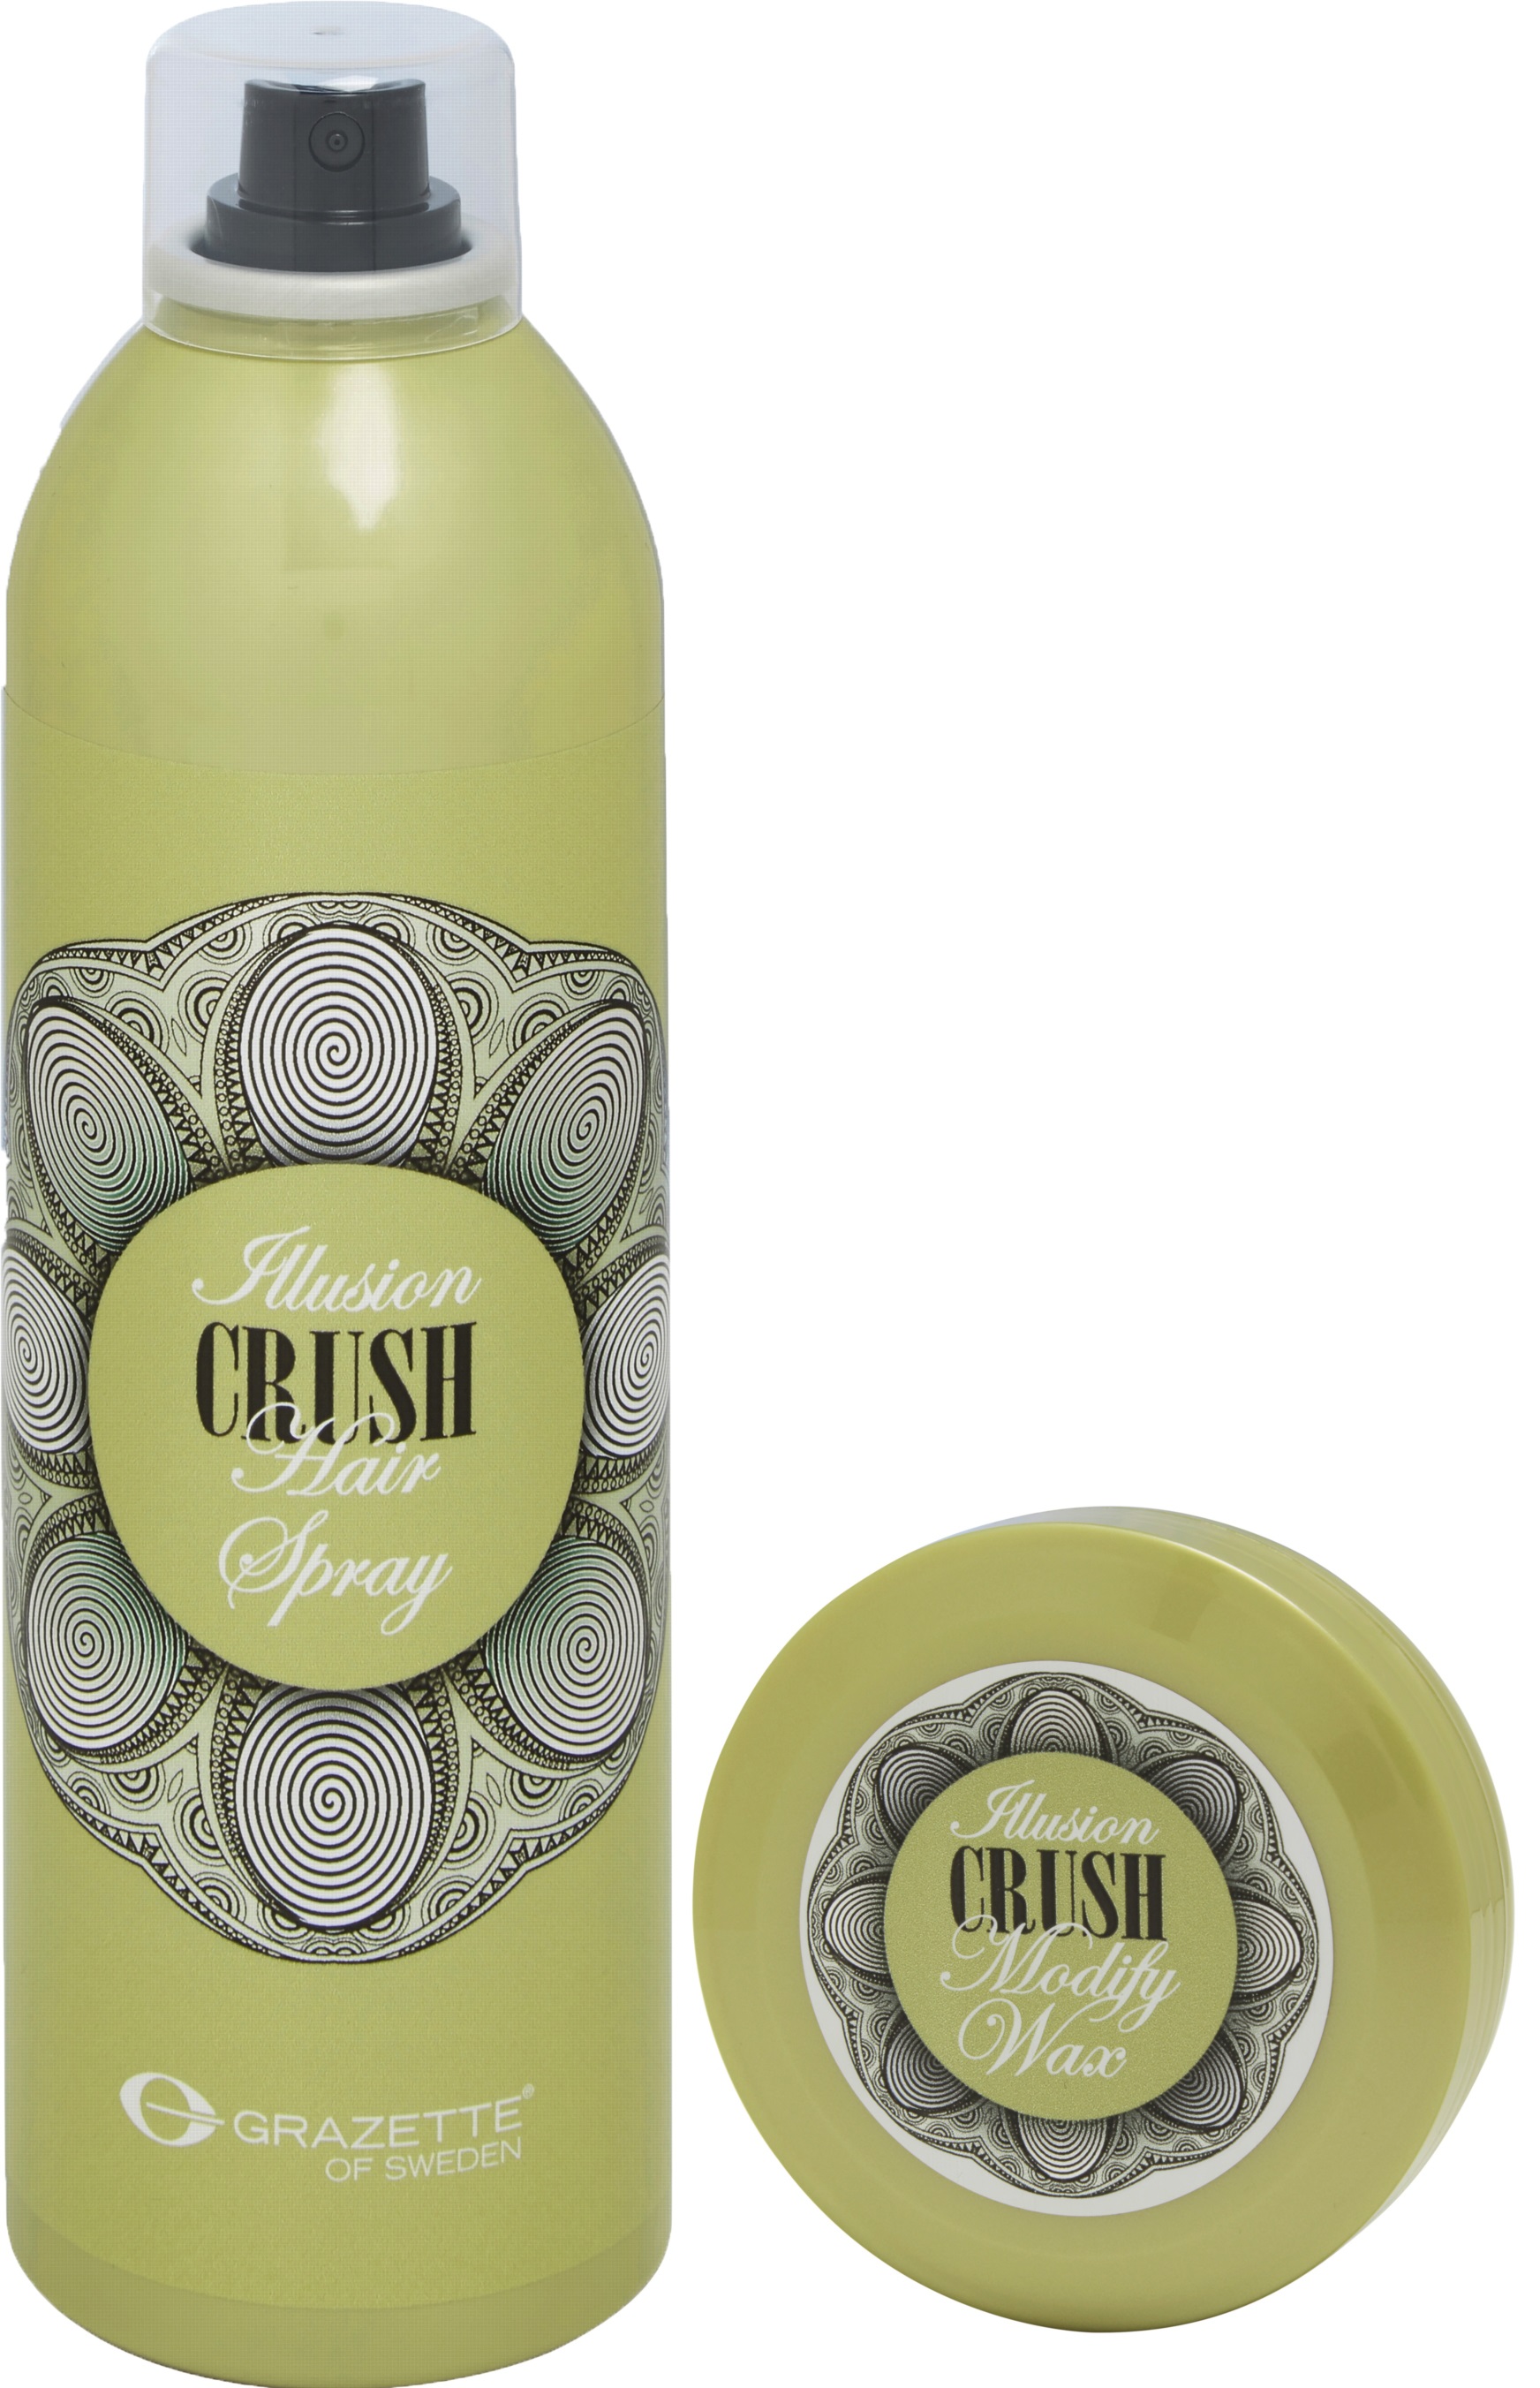 Grazette Crush Illusion Modify Wax + Hair Spray